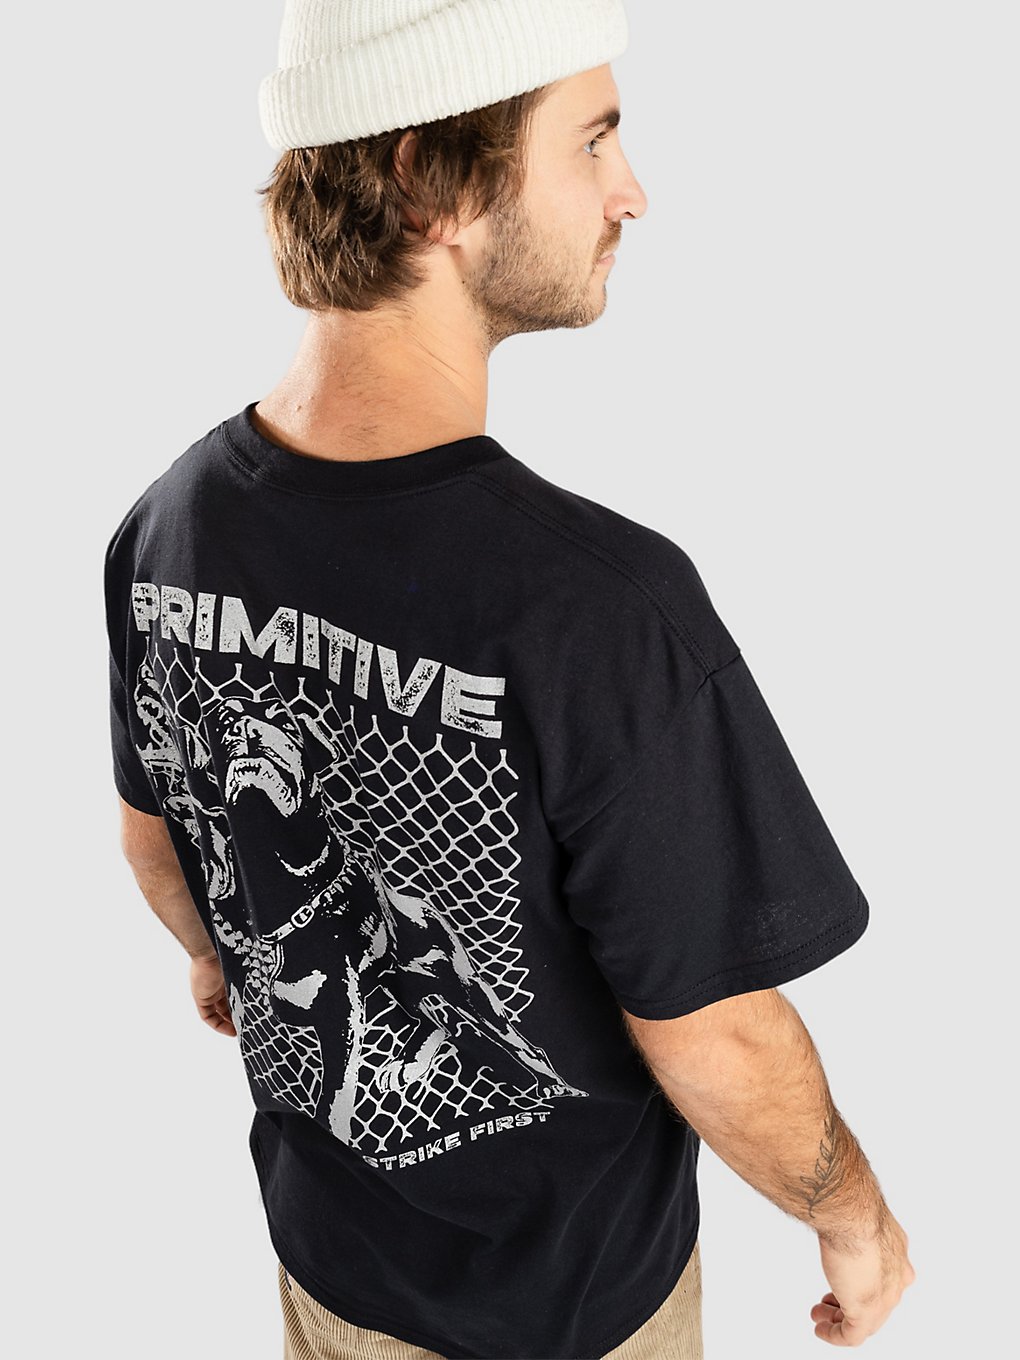 Primitive Warning T-Shirt black kaufen